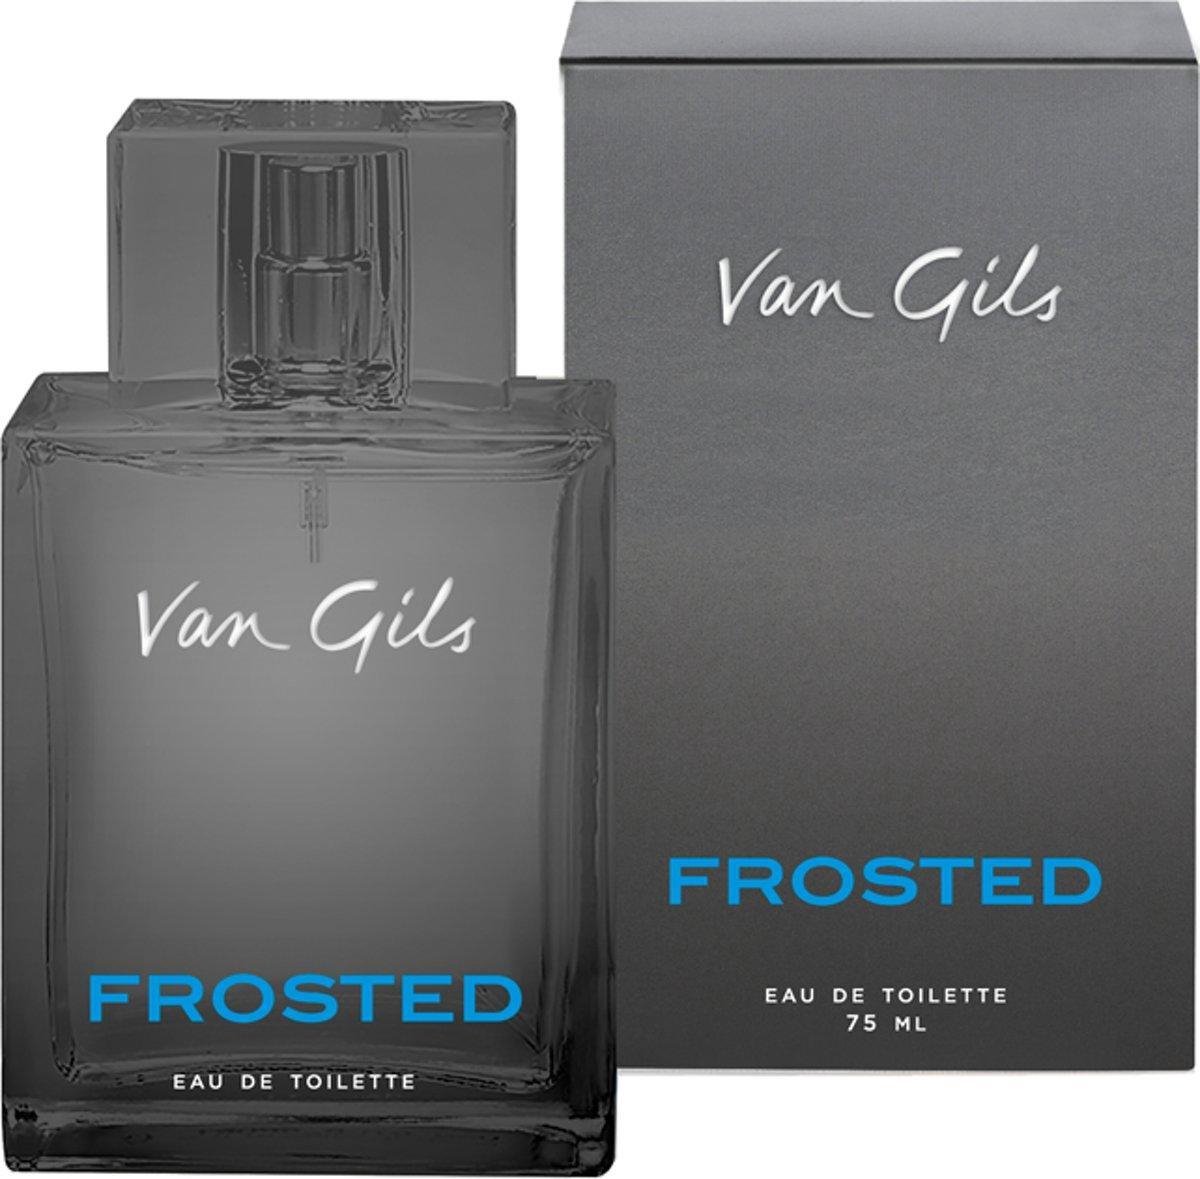 Van Gils - Frosted eau de toilette spray 75 ml